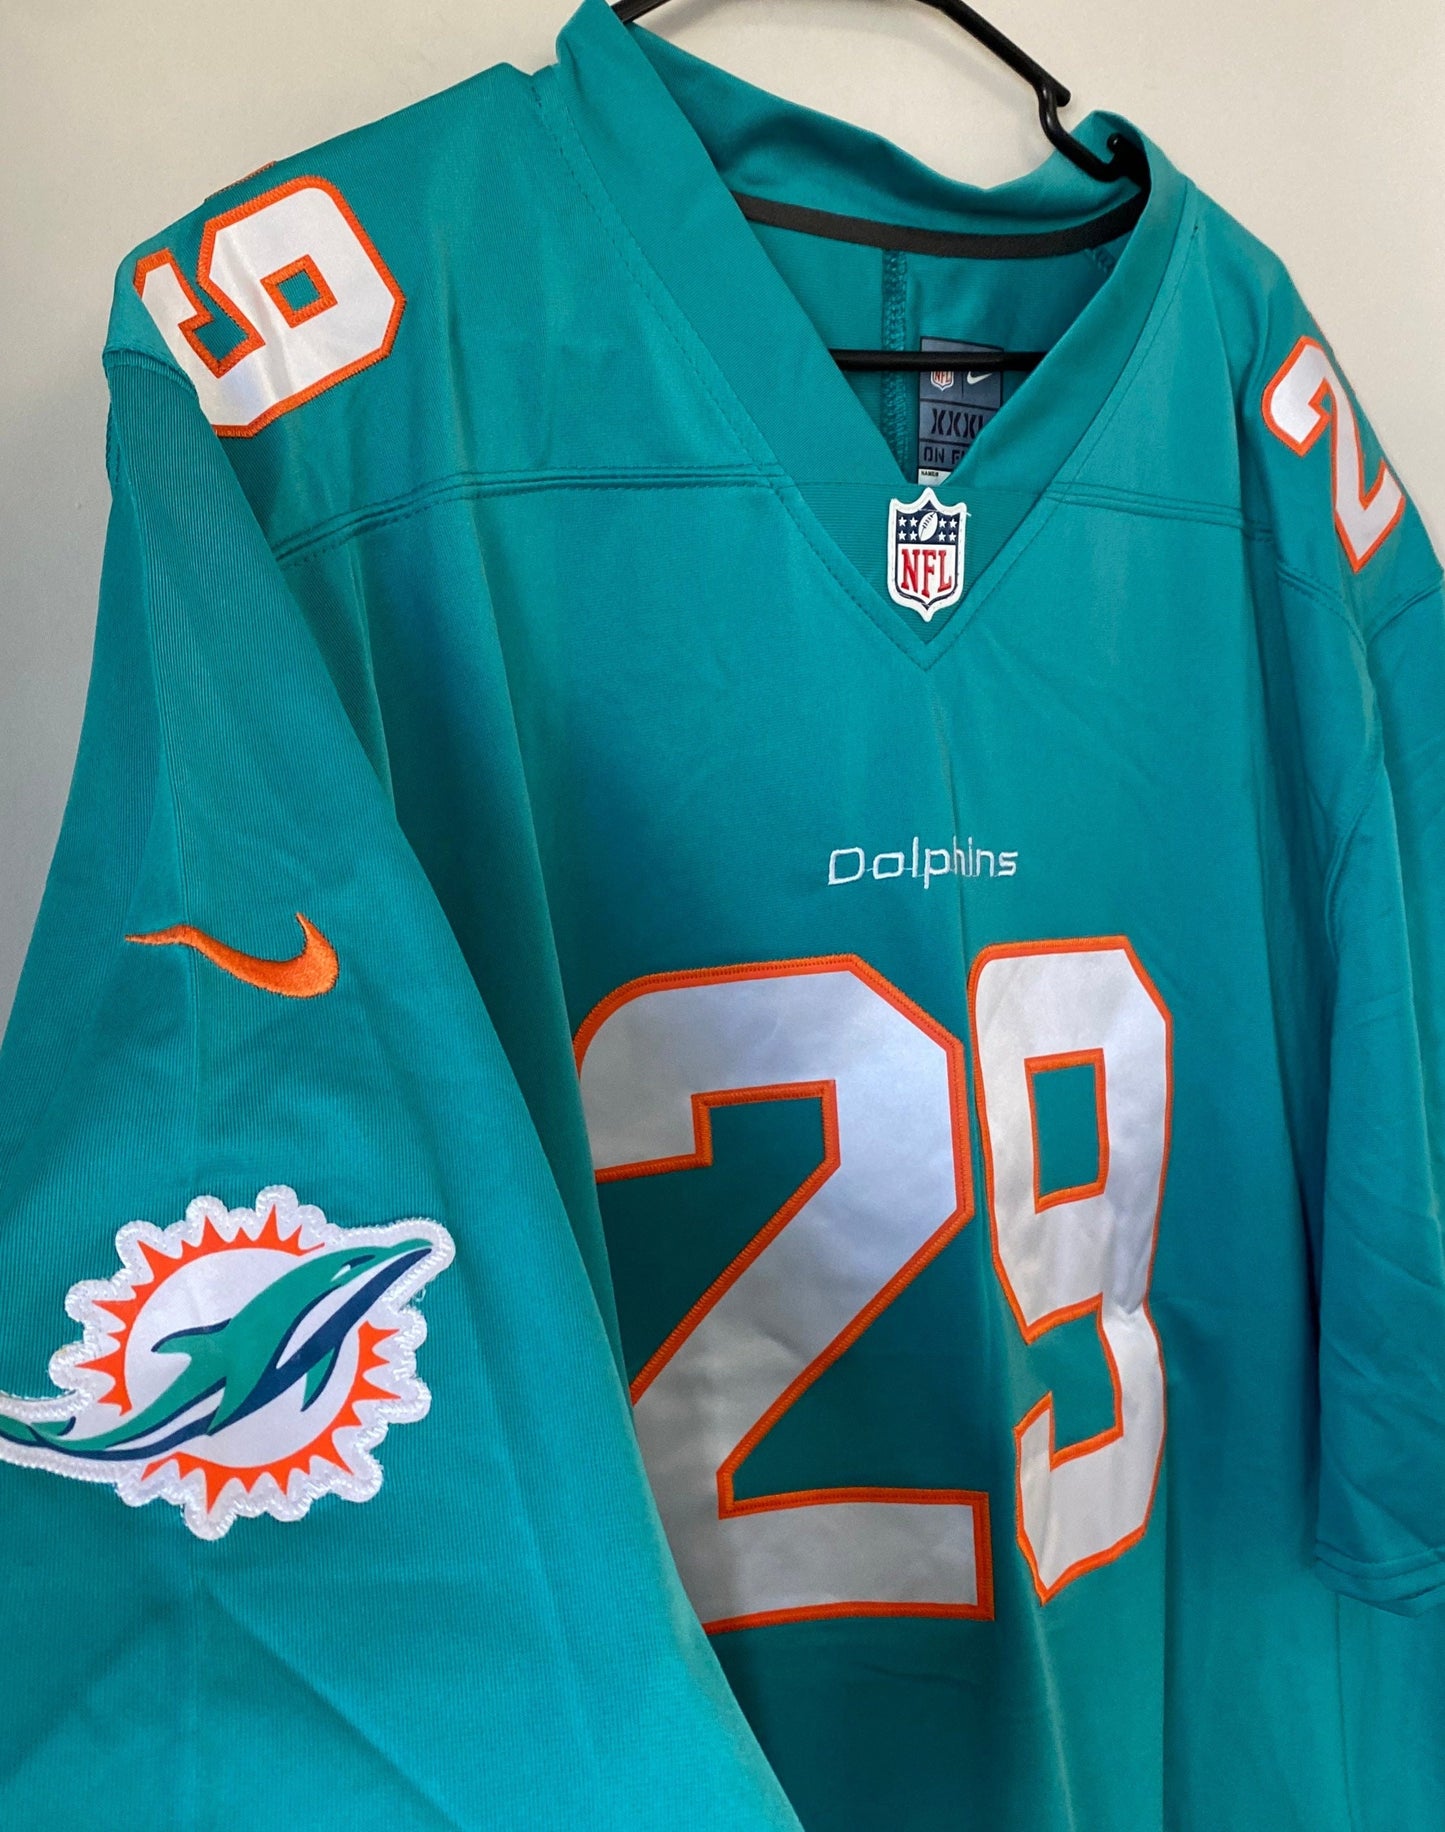 Miami Dolphins Minkah Fitzpatrick #29 Aqua Green Collectible NFL Football Jersey Adult Size XXXL Perfect Birthday Gift Man Cave Sports Decor